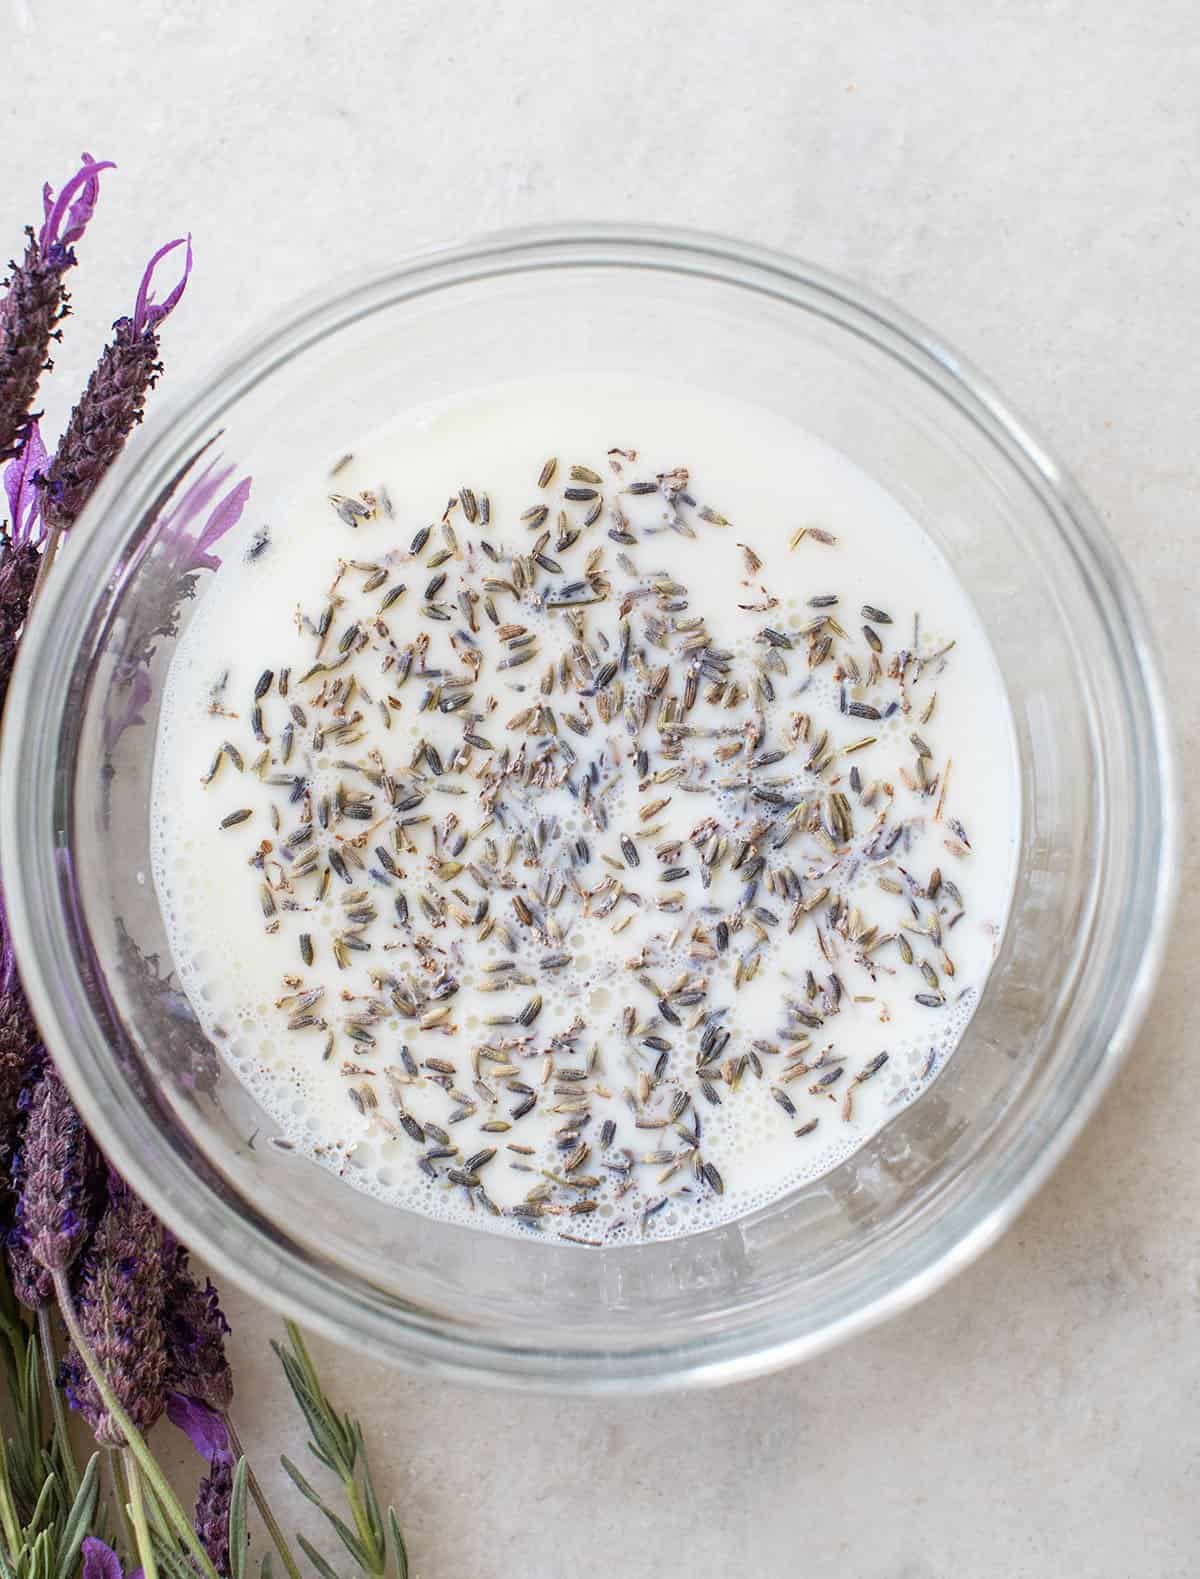 lavender infusing in milk to make lavender milk